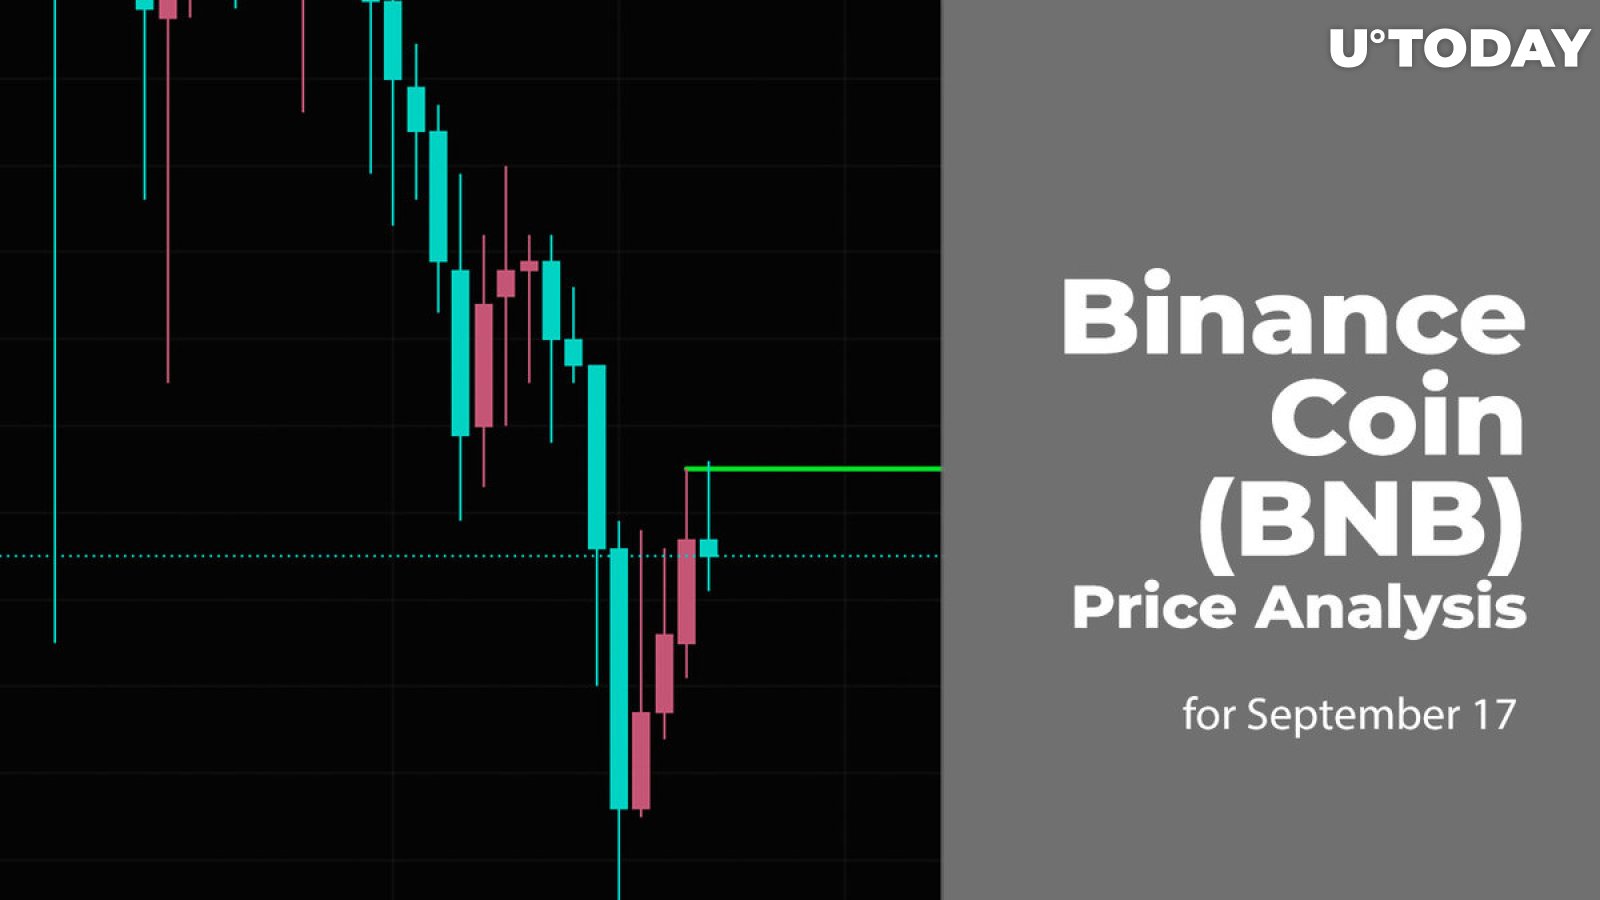 Binance Coin (BNB) Price Analysis for September 17